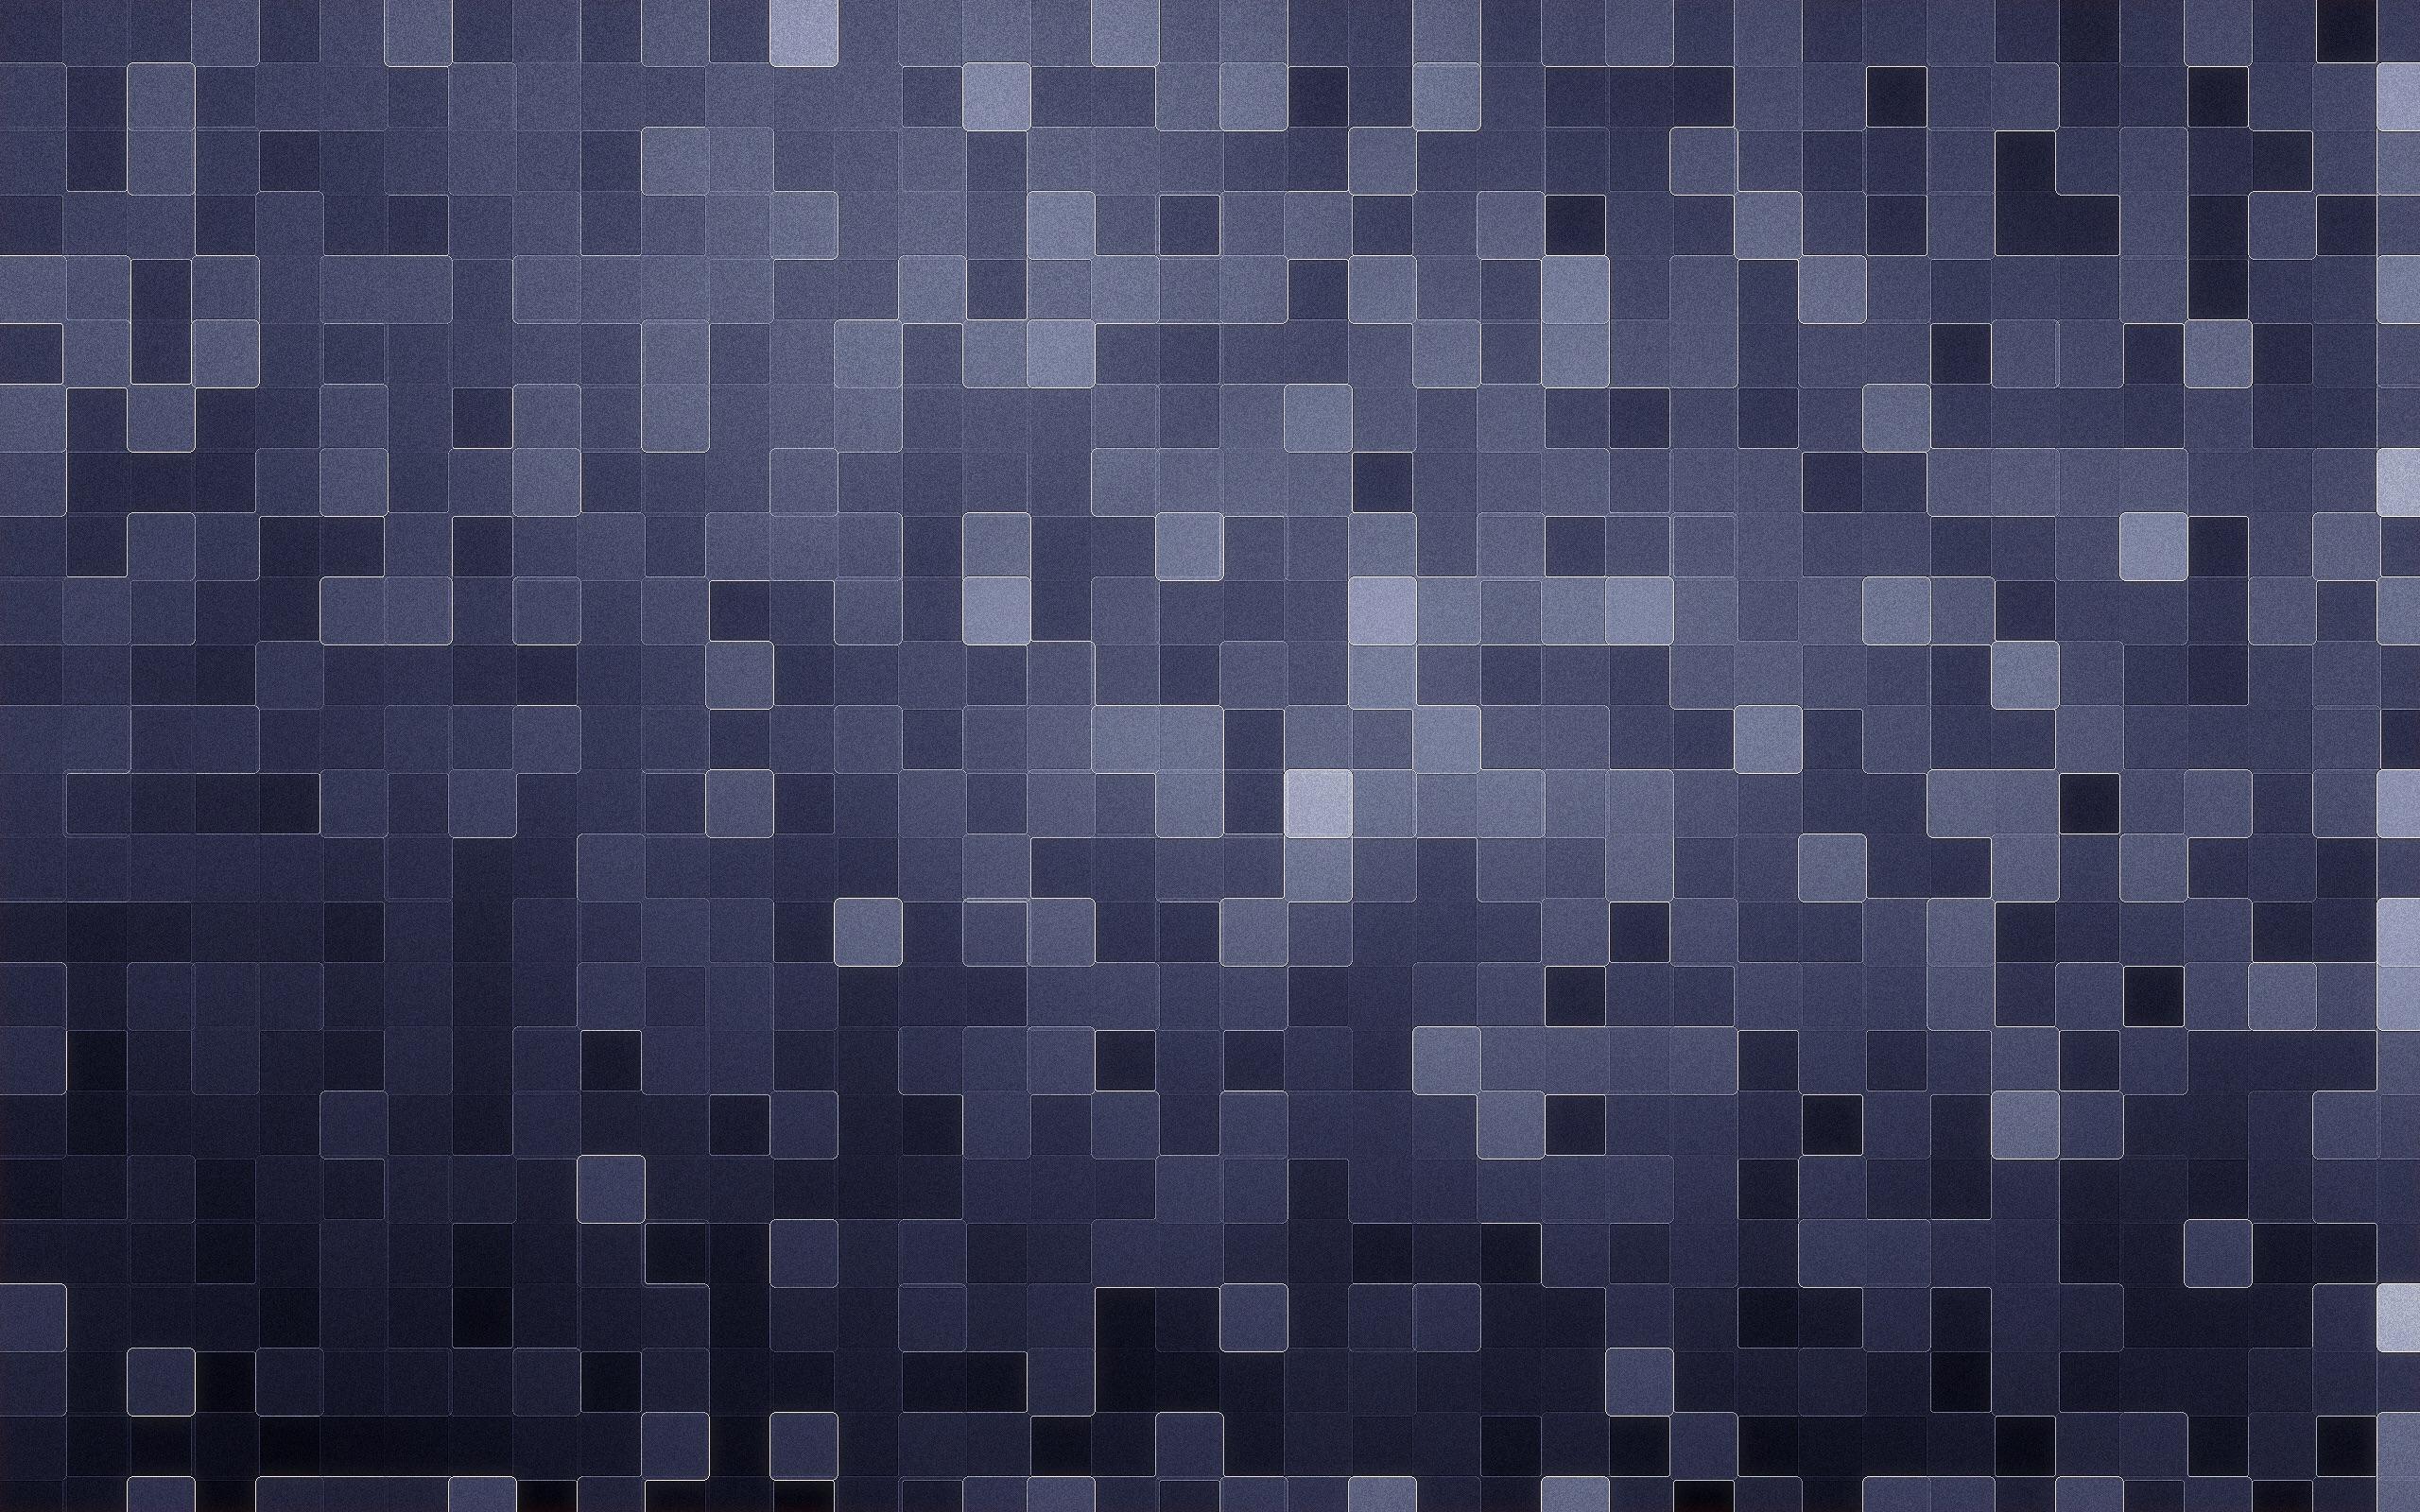 MkbHD iPhone Xs Wallpaper iPhonewallpaper